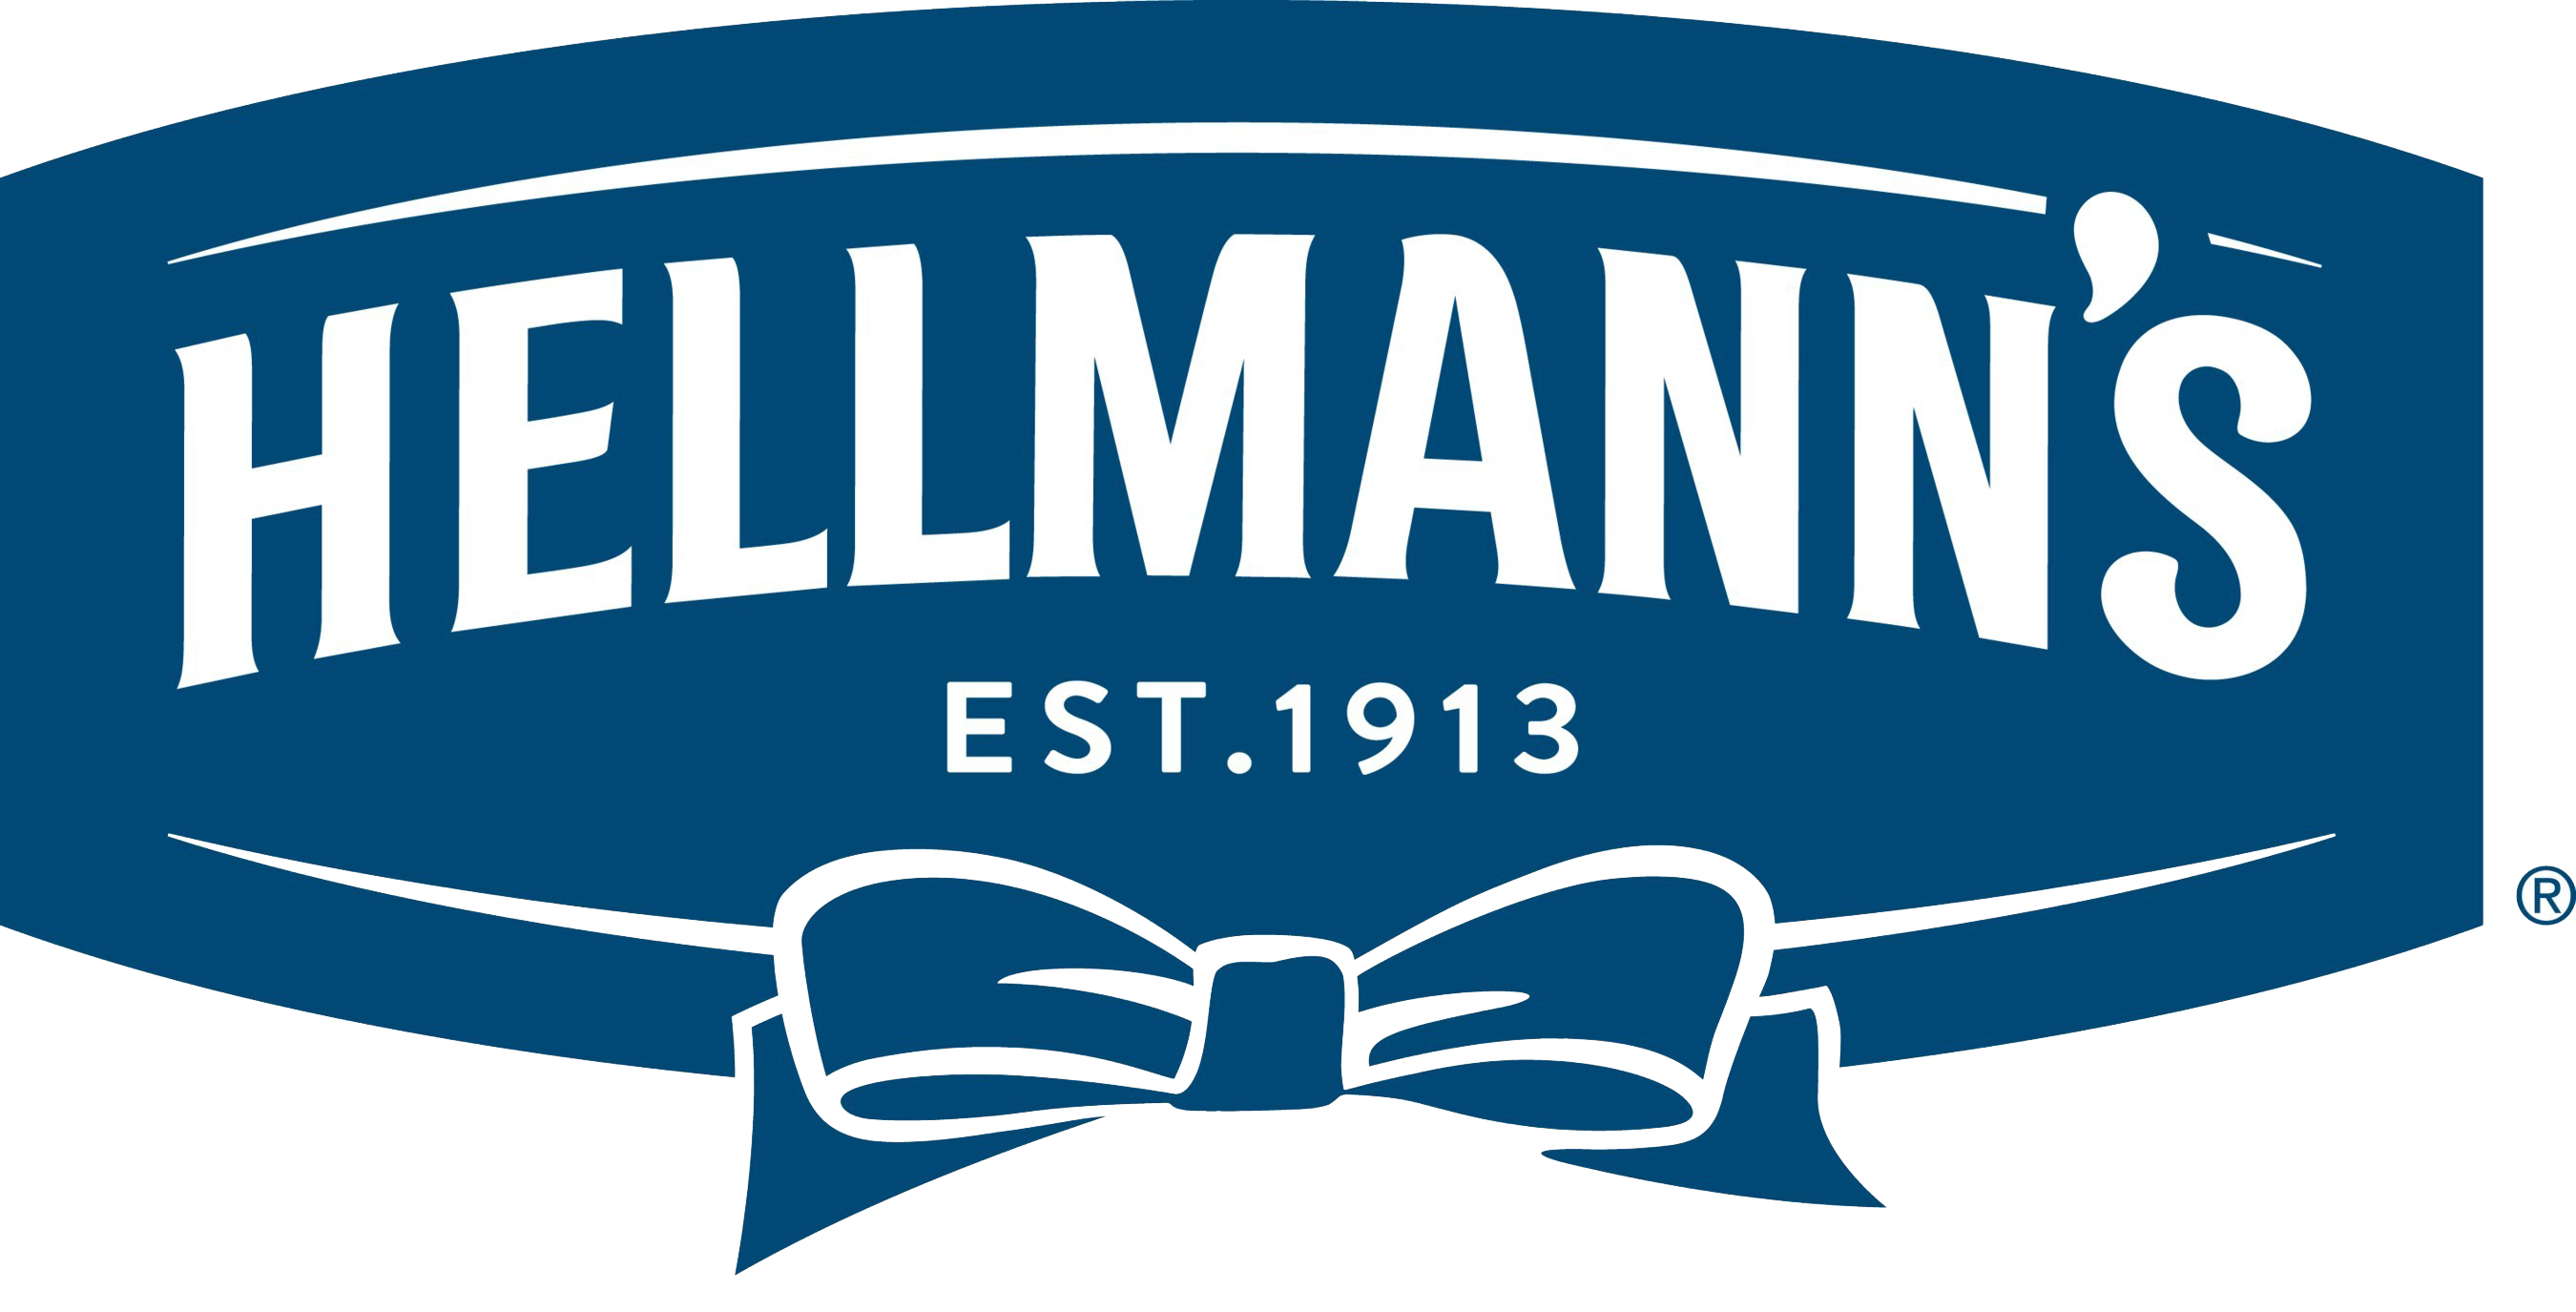 hellmanns-logo-grungecake-thumbnail logo